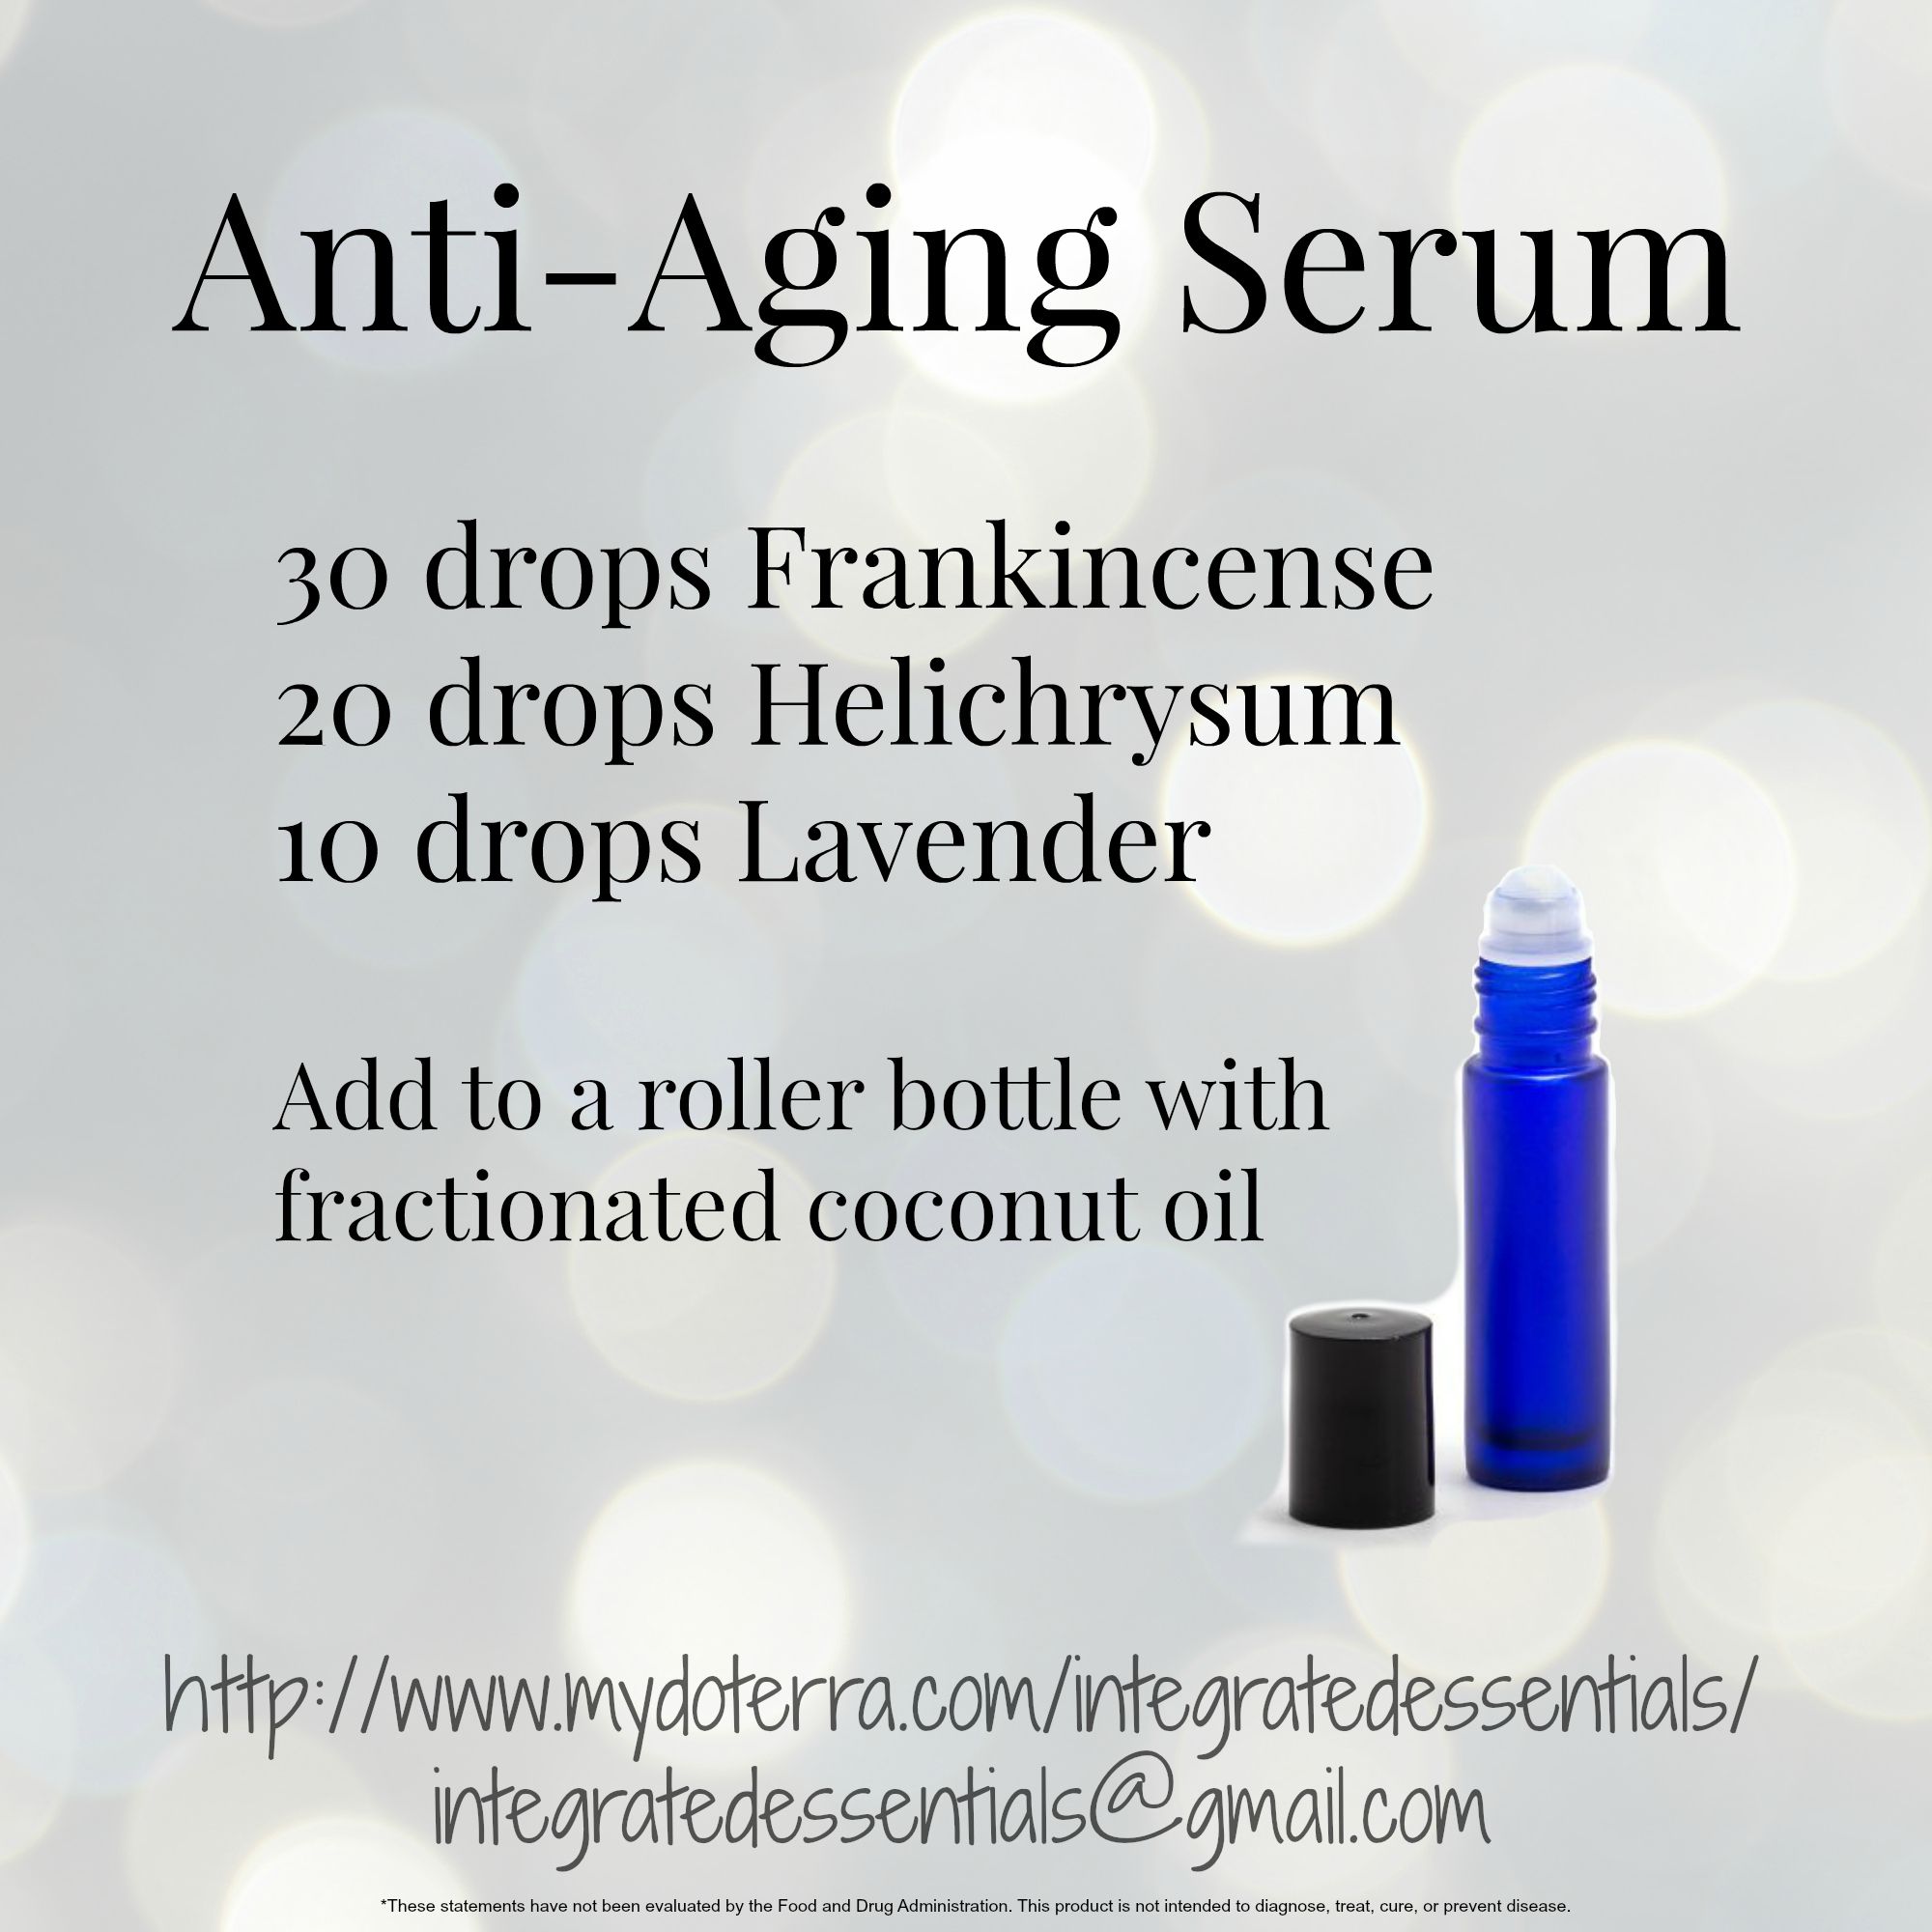 Anti aging serum, doTERRA, essential oils, roller bottle recipes ...